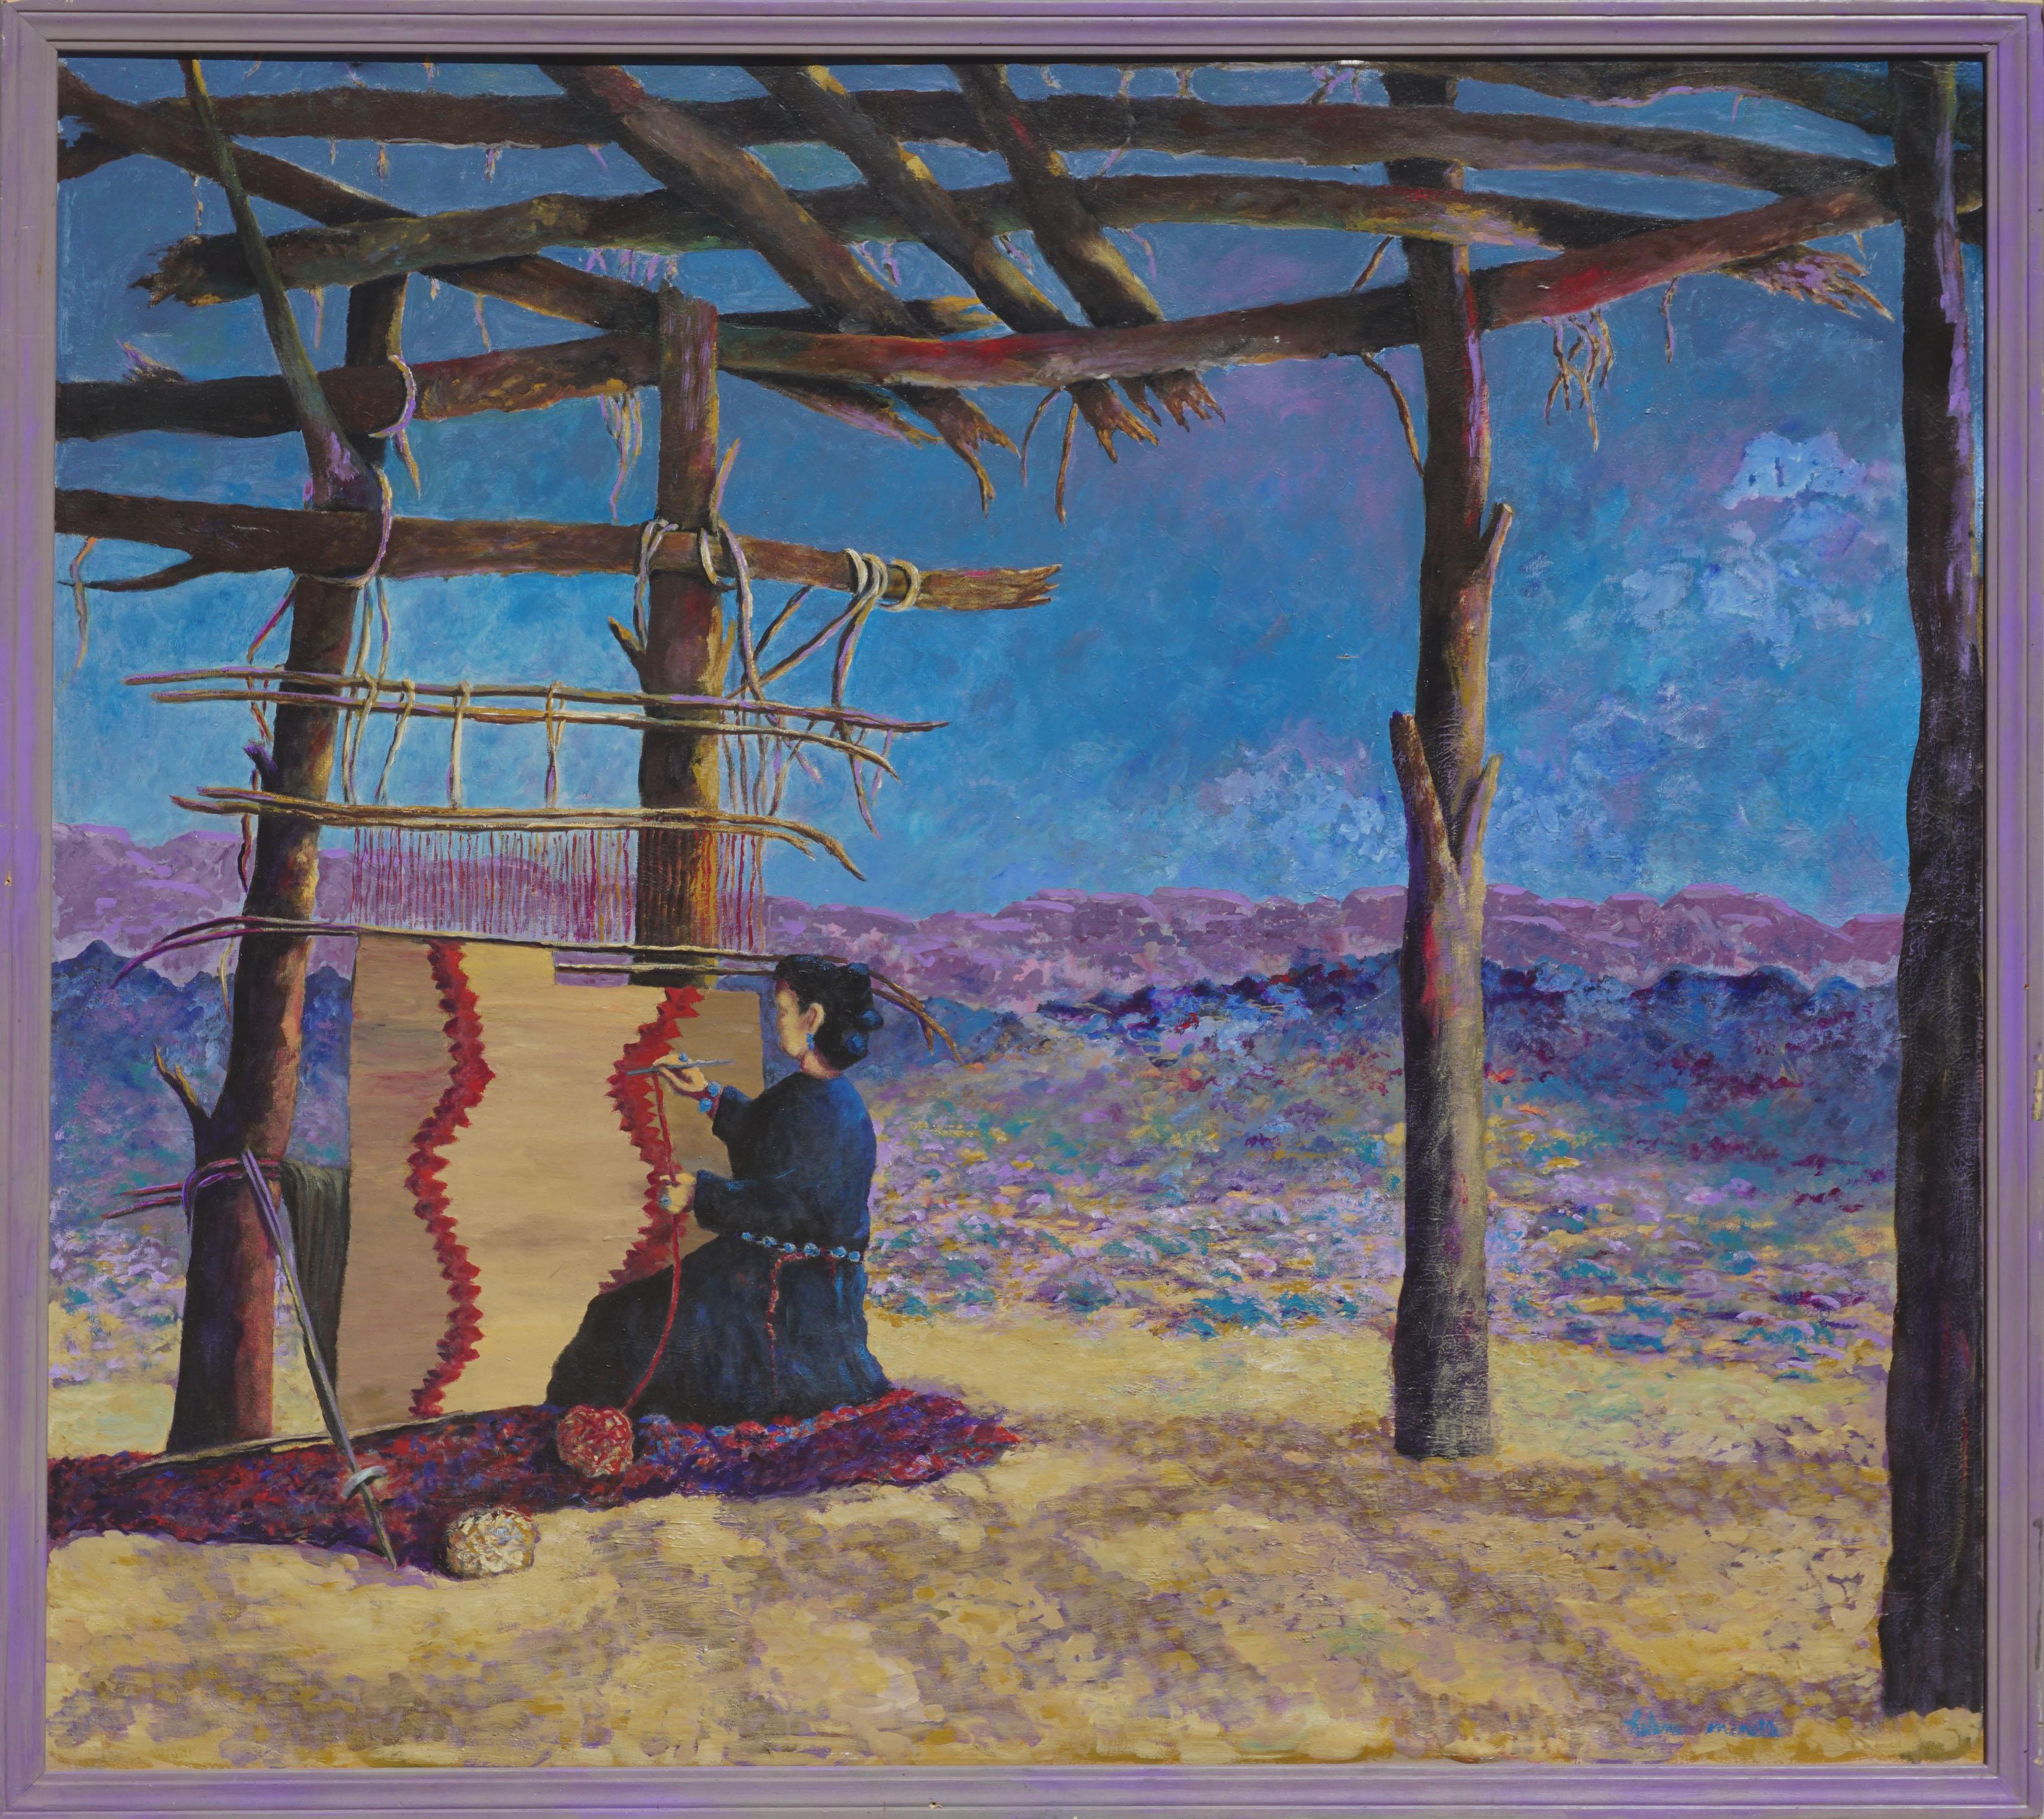 Helene Minelli  Figurative Painting - "The Weaver" - Large Scale Navajo Figurative Landscape 